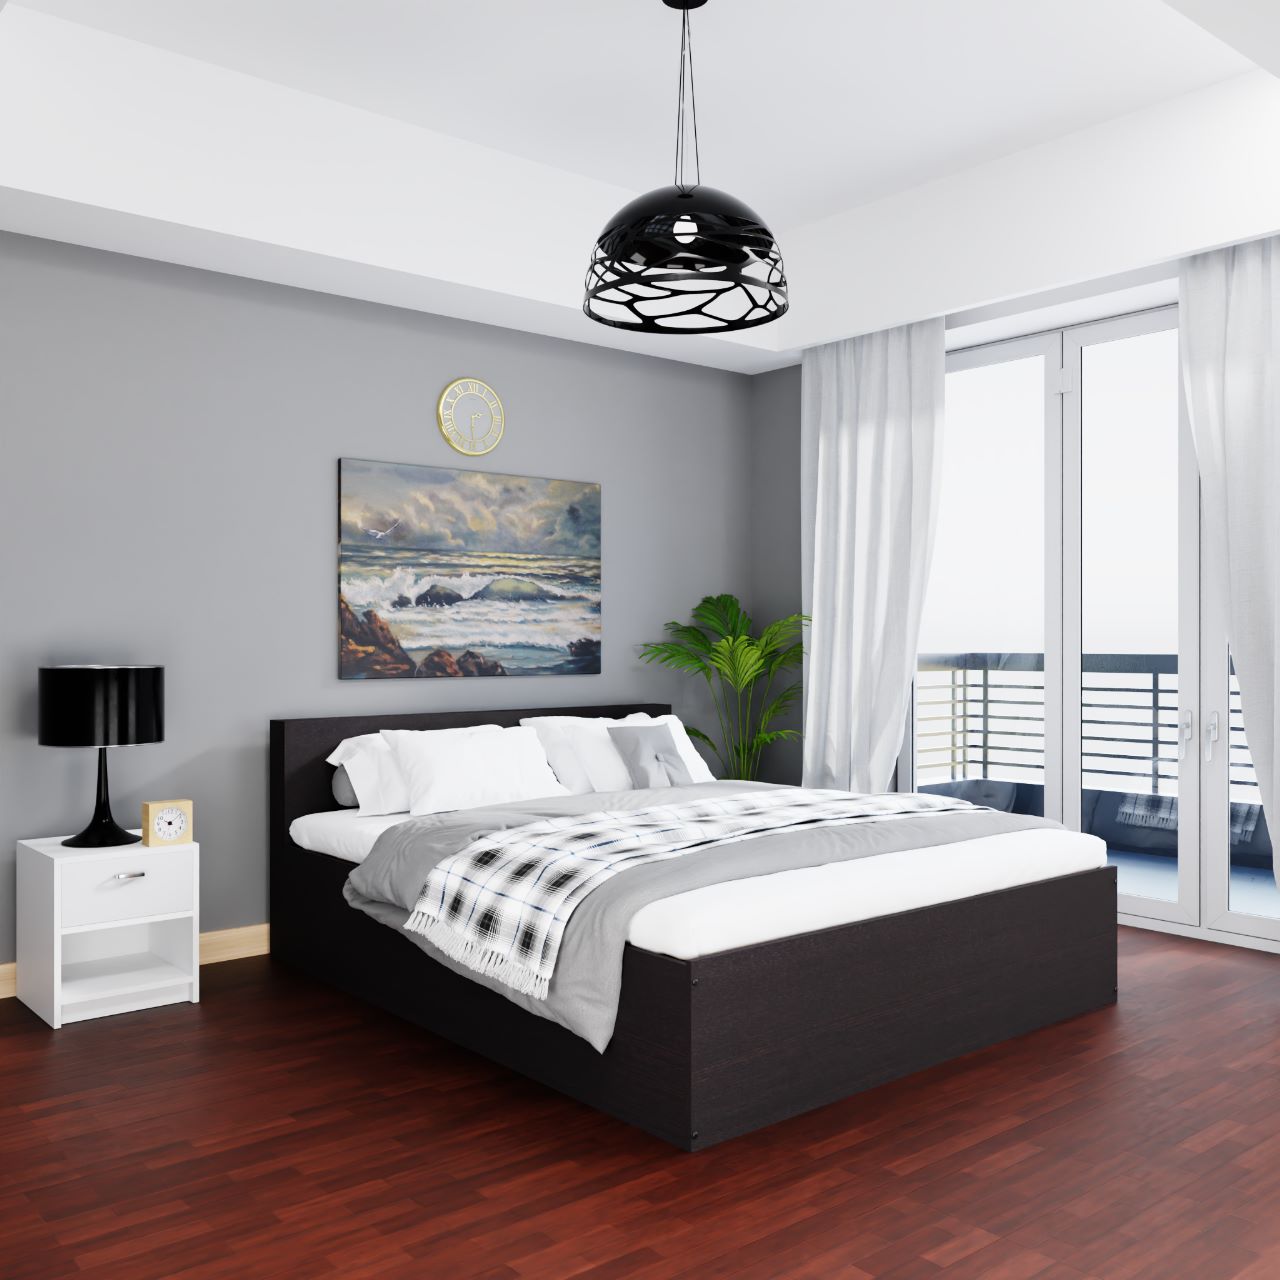 VIKI Engineered Wood Bed (Queen size)-2100x1700x800-Frosty white & Wenge Bedroom Furniture Sets VIKI FURNITURE Wenge  